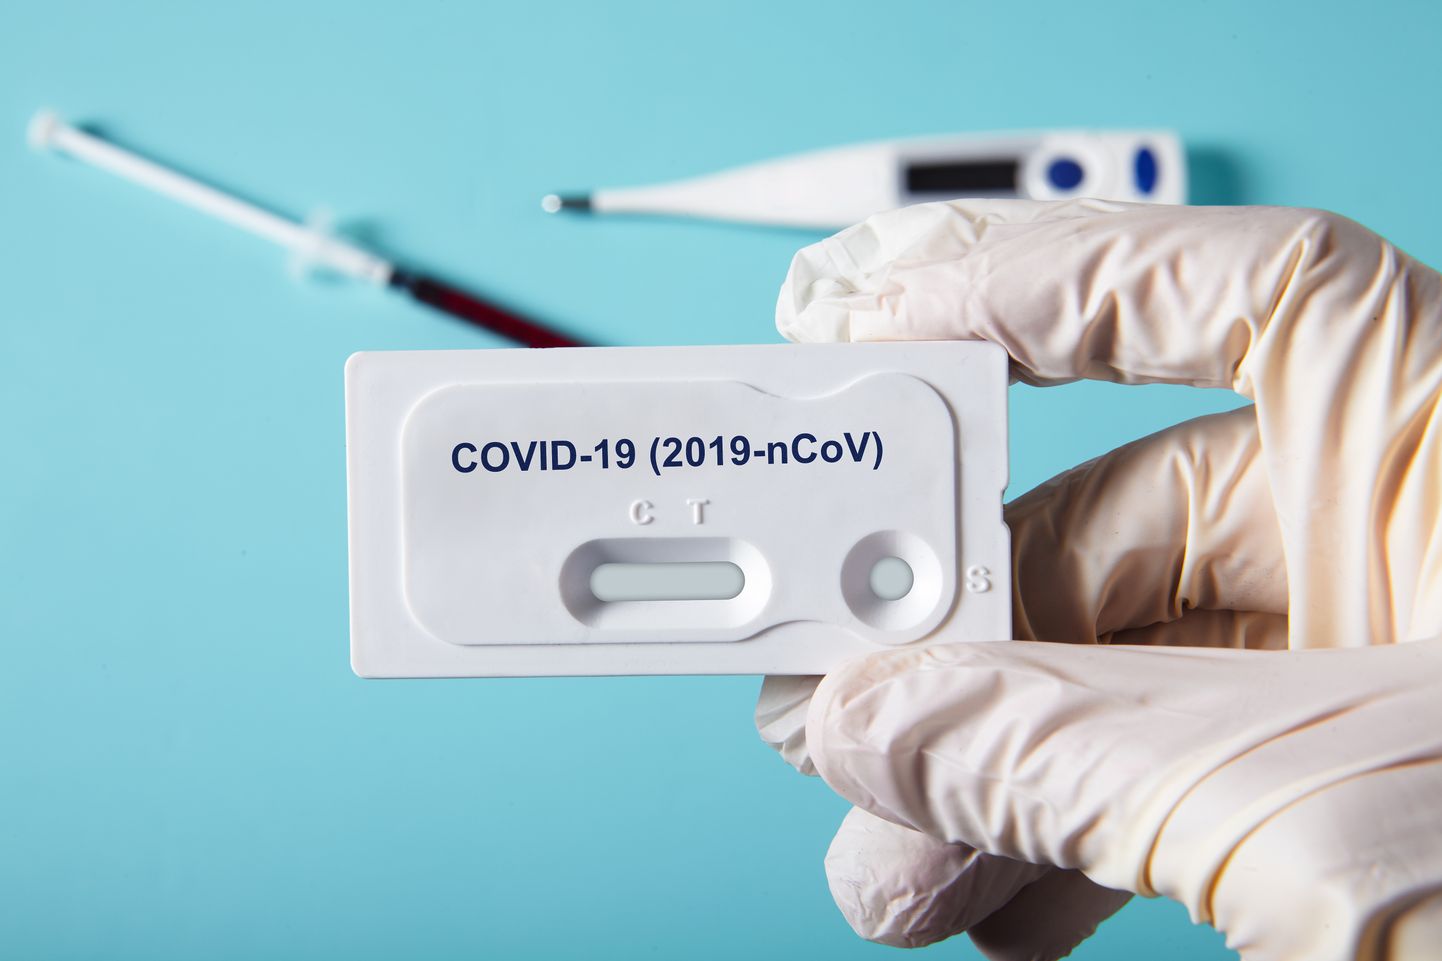 Doctor holding a test kit for viral disease COVID-19 2019-nCoV. Lab card kit test for viral novel coronavirus sars-cov-2 virus